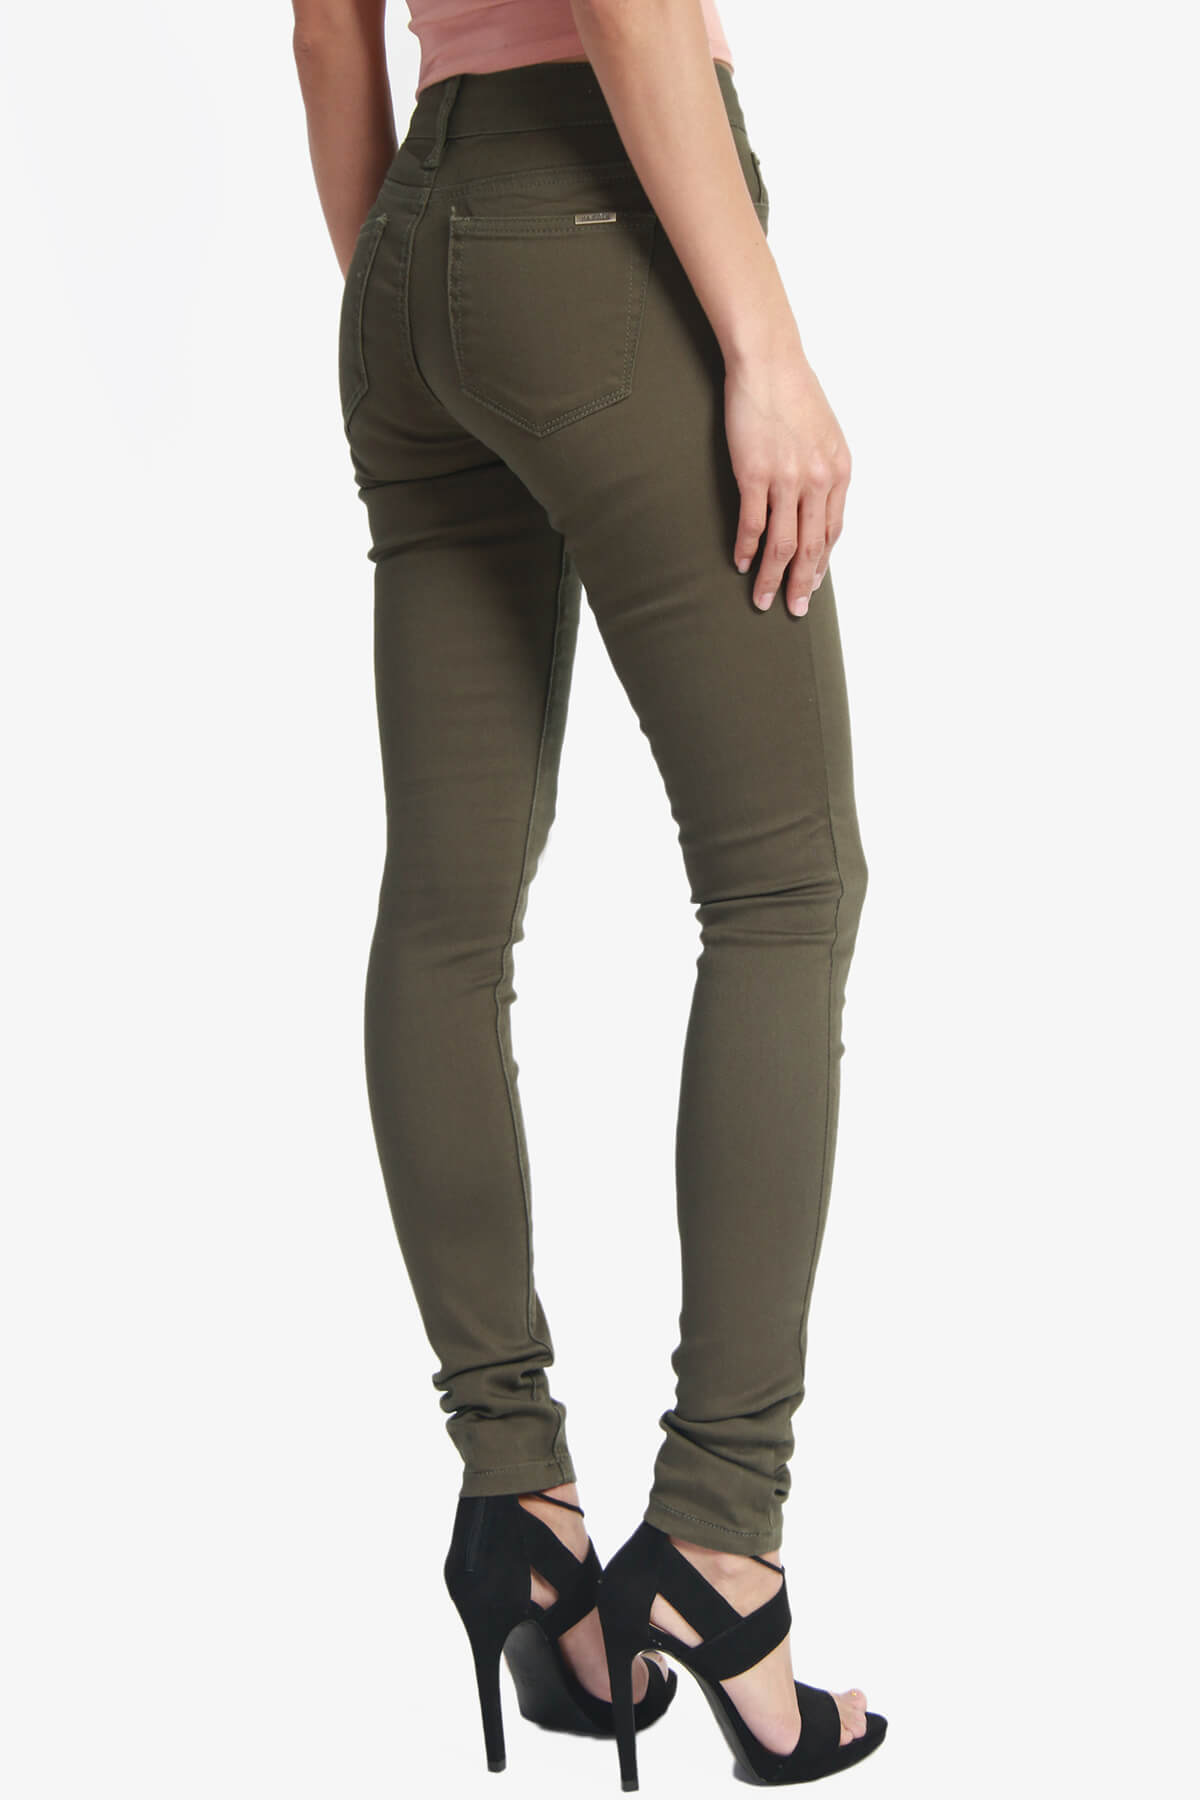 TheMogan Women's Army Olive Green 5 Pocket Stretch Denim Low Rise Skinny Jeans - image 4 of 7